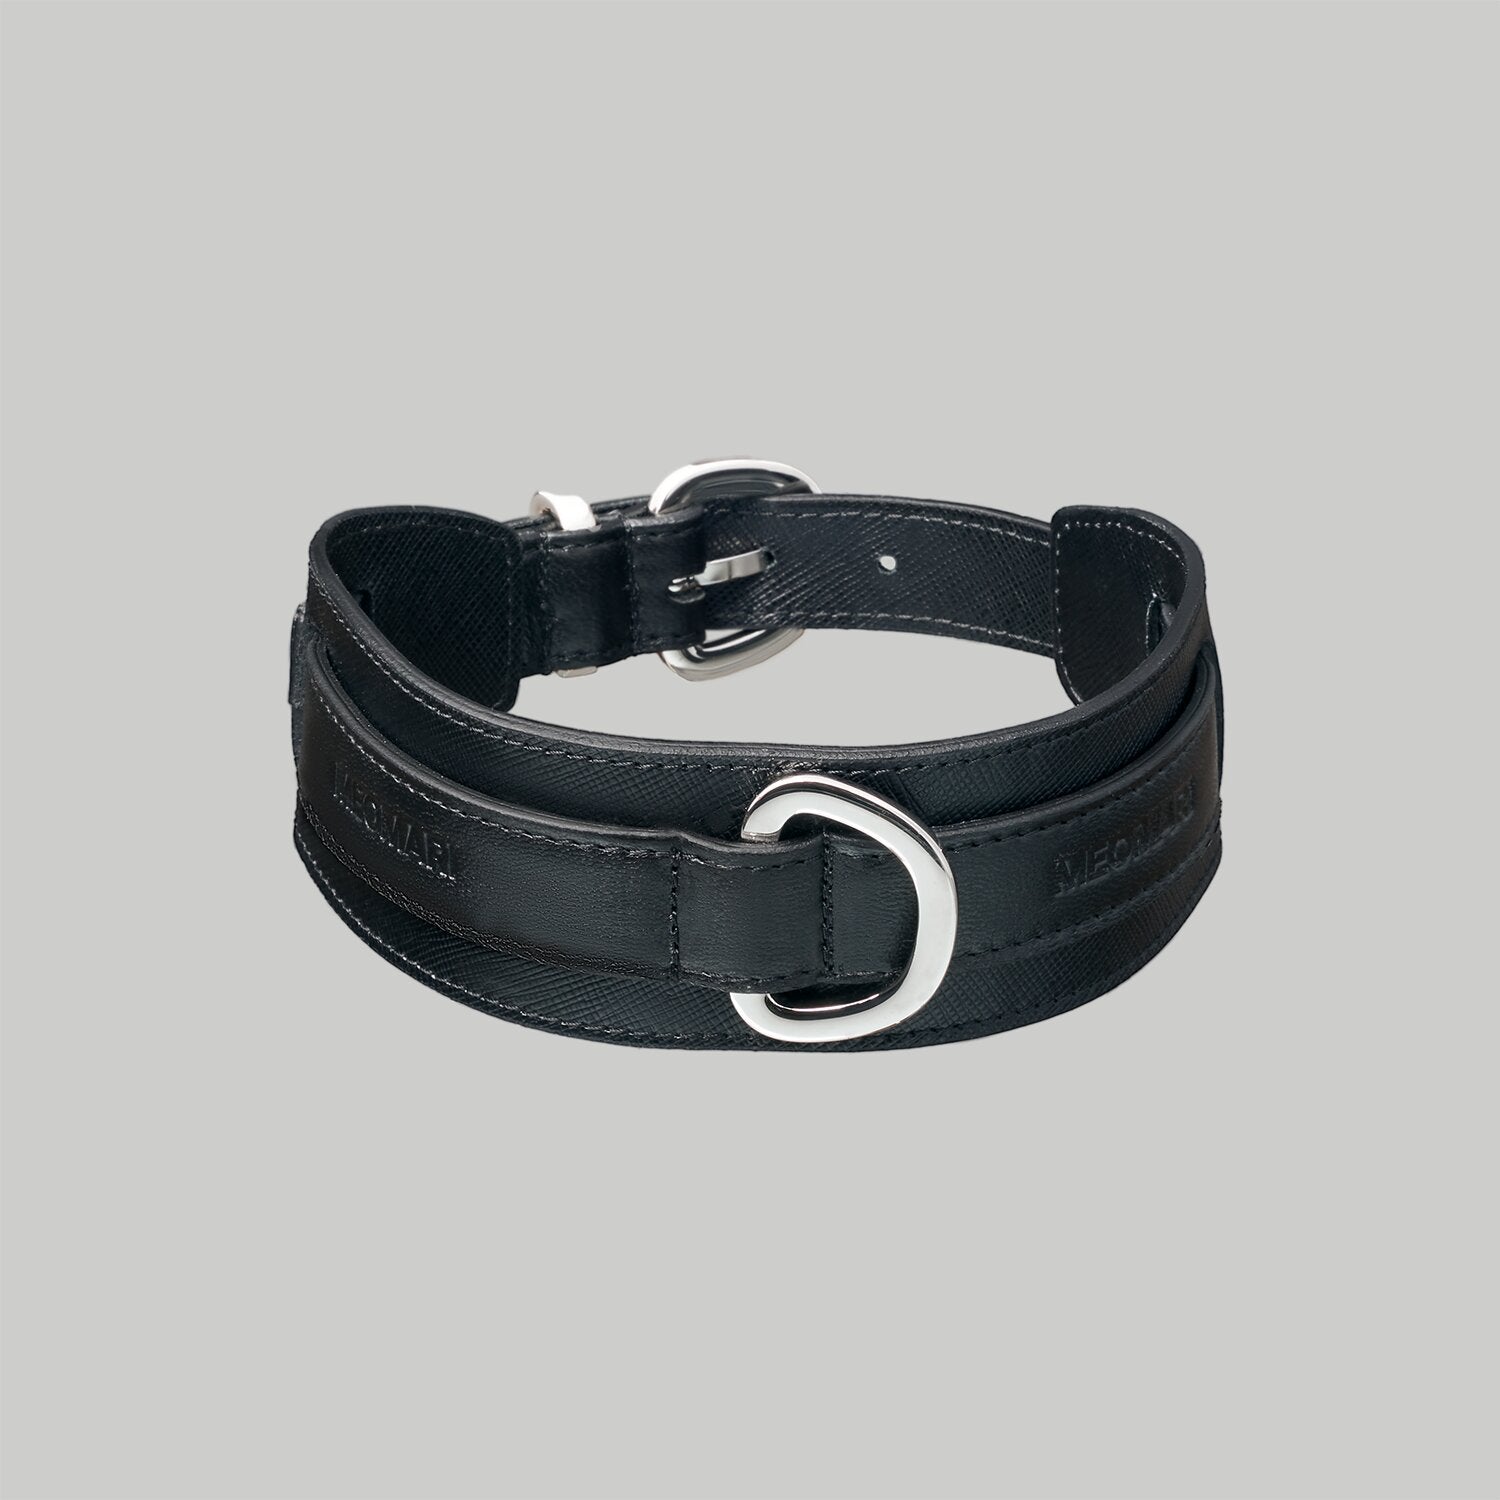 Luxury dog collar in black Saffiano leather with Palladium